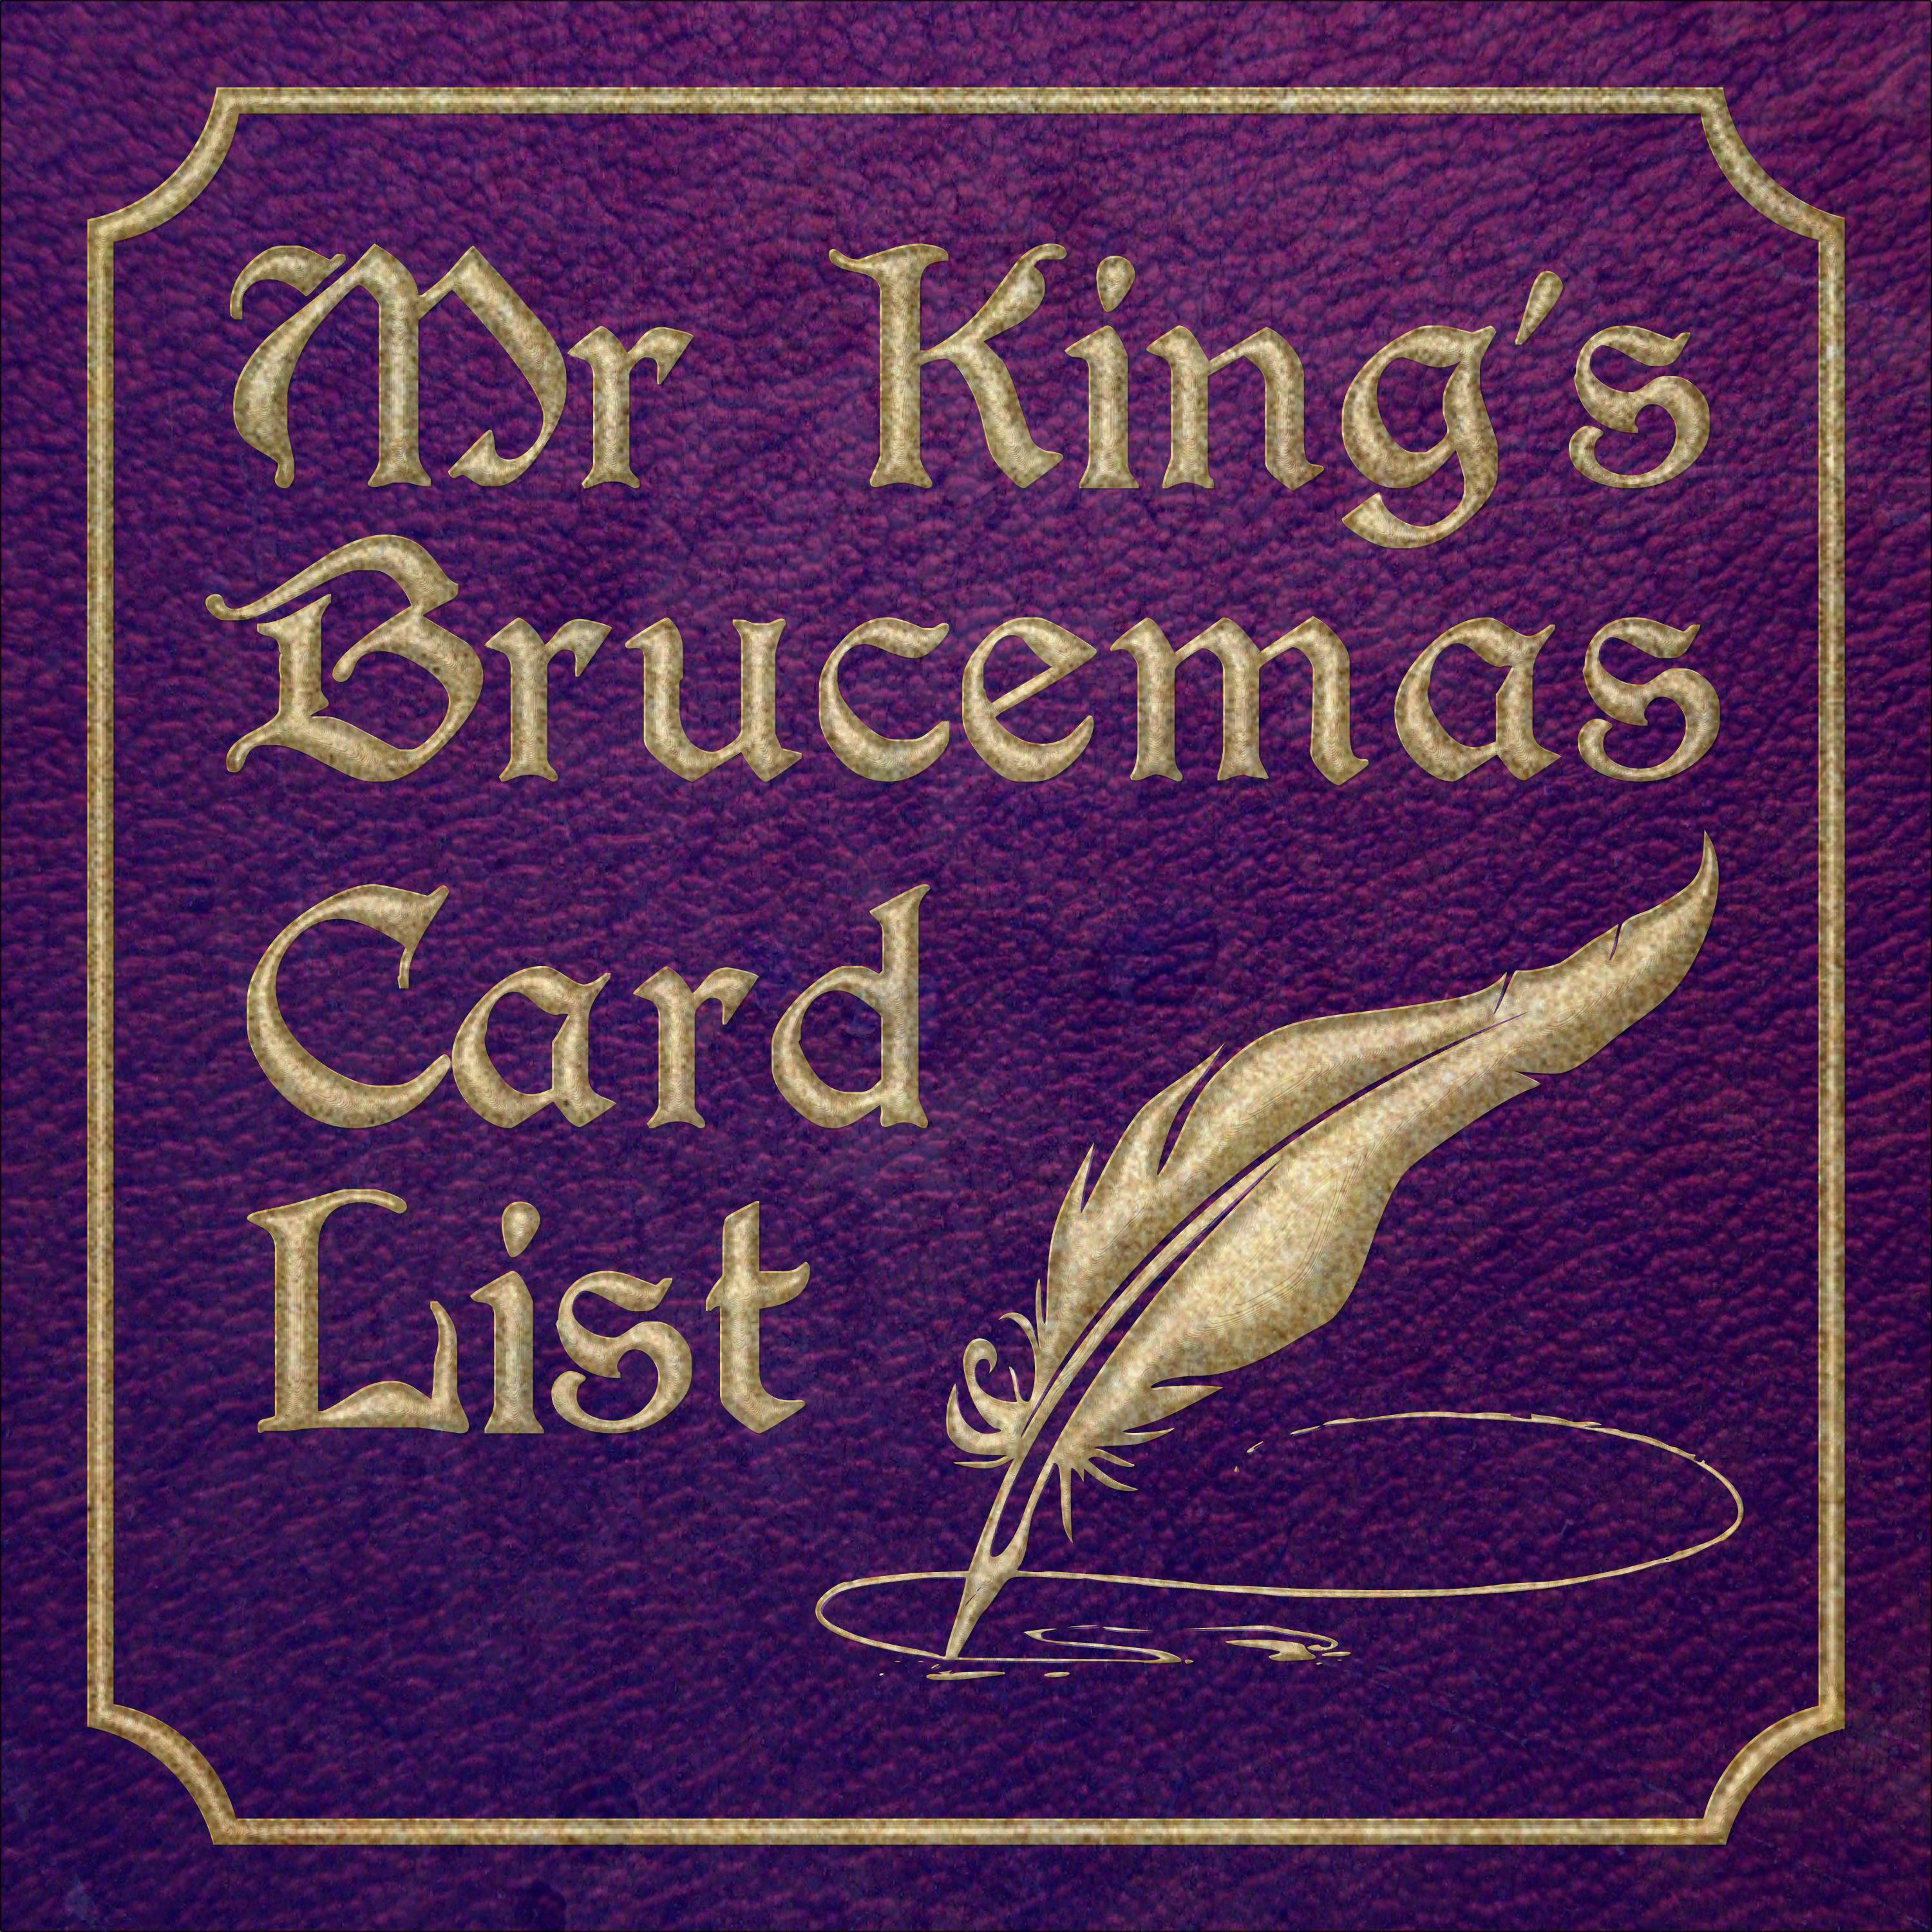 Mr King's Brucemas Card List